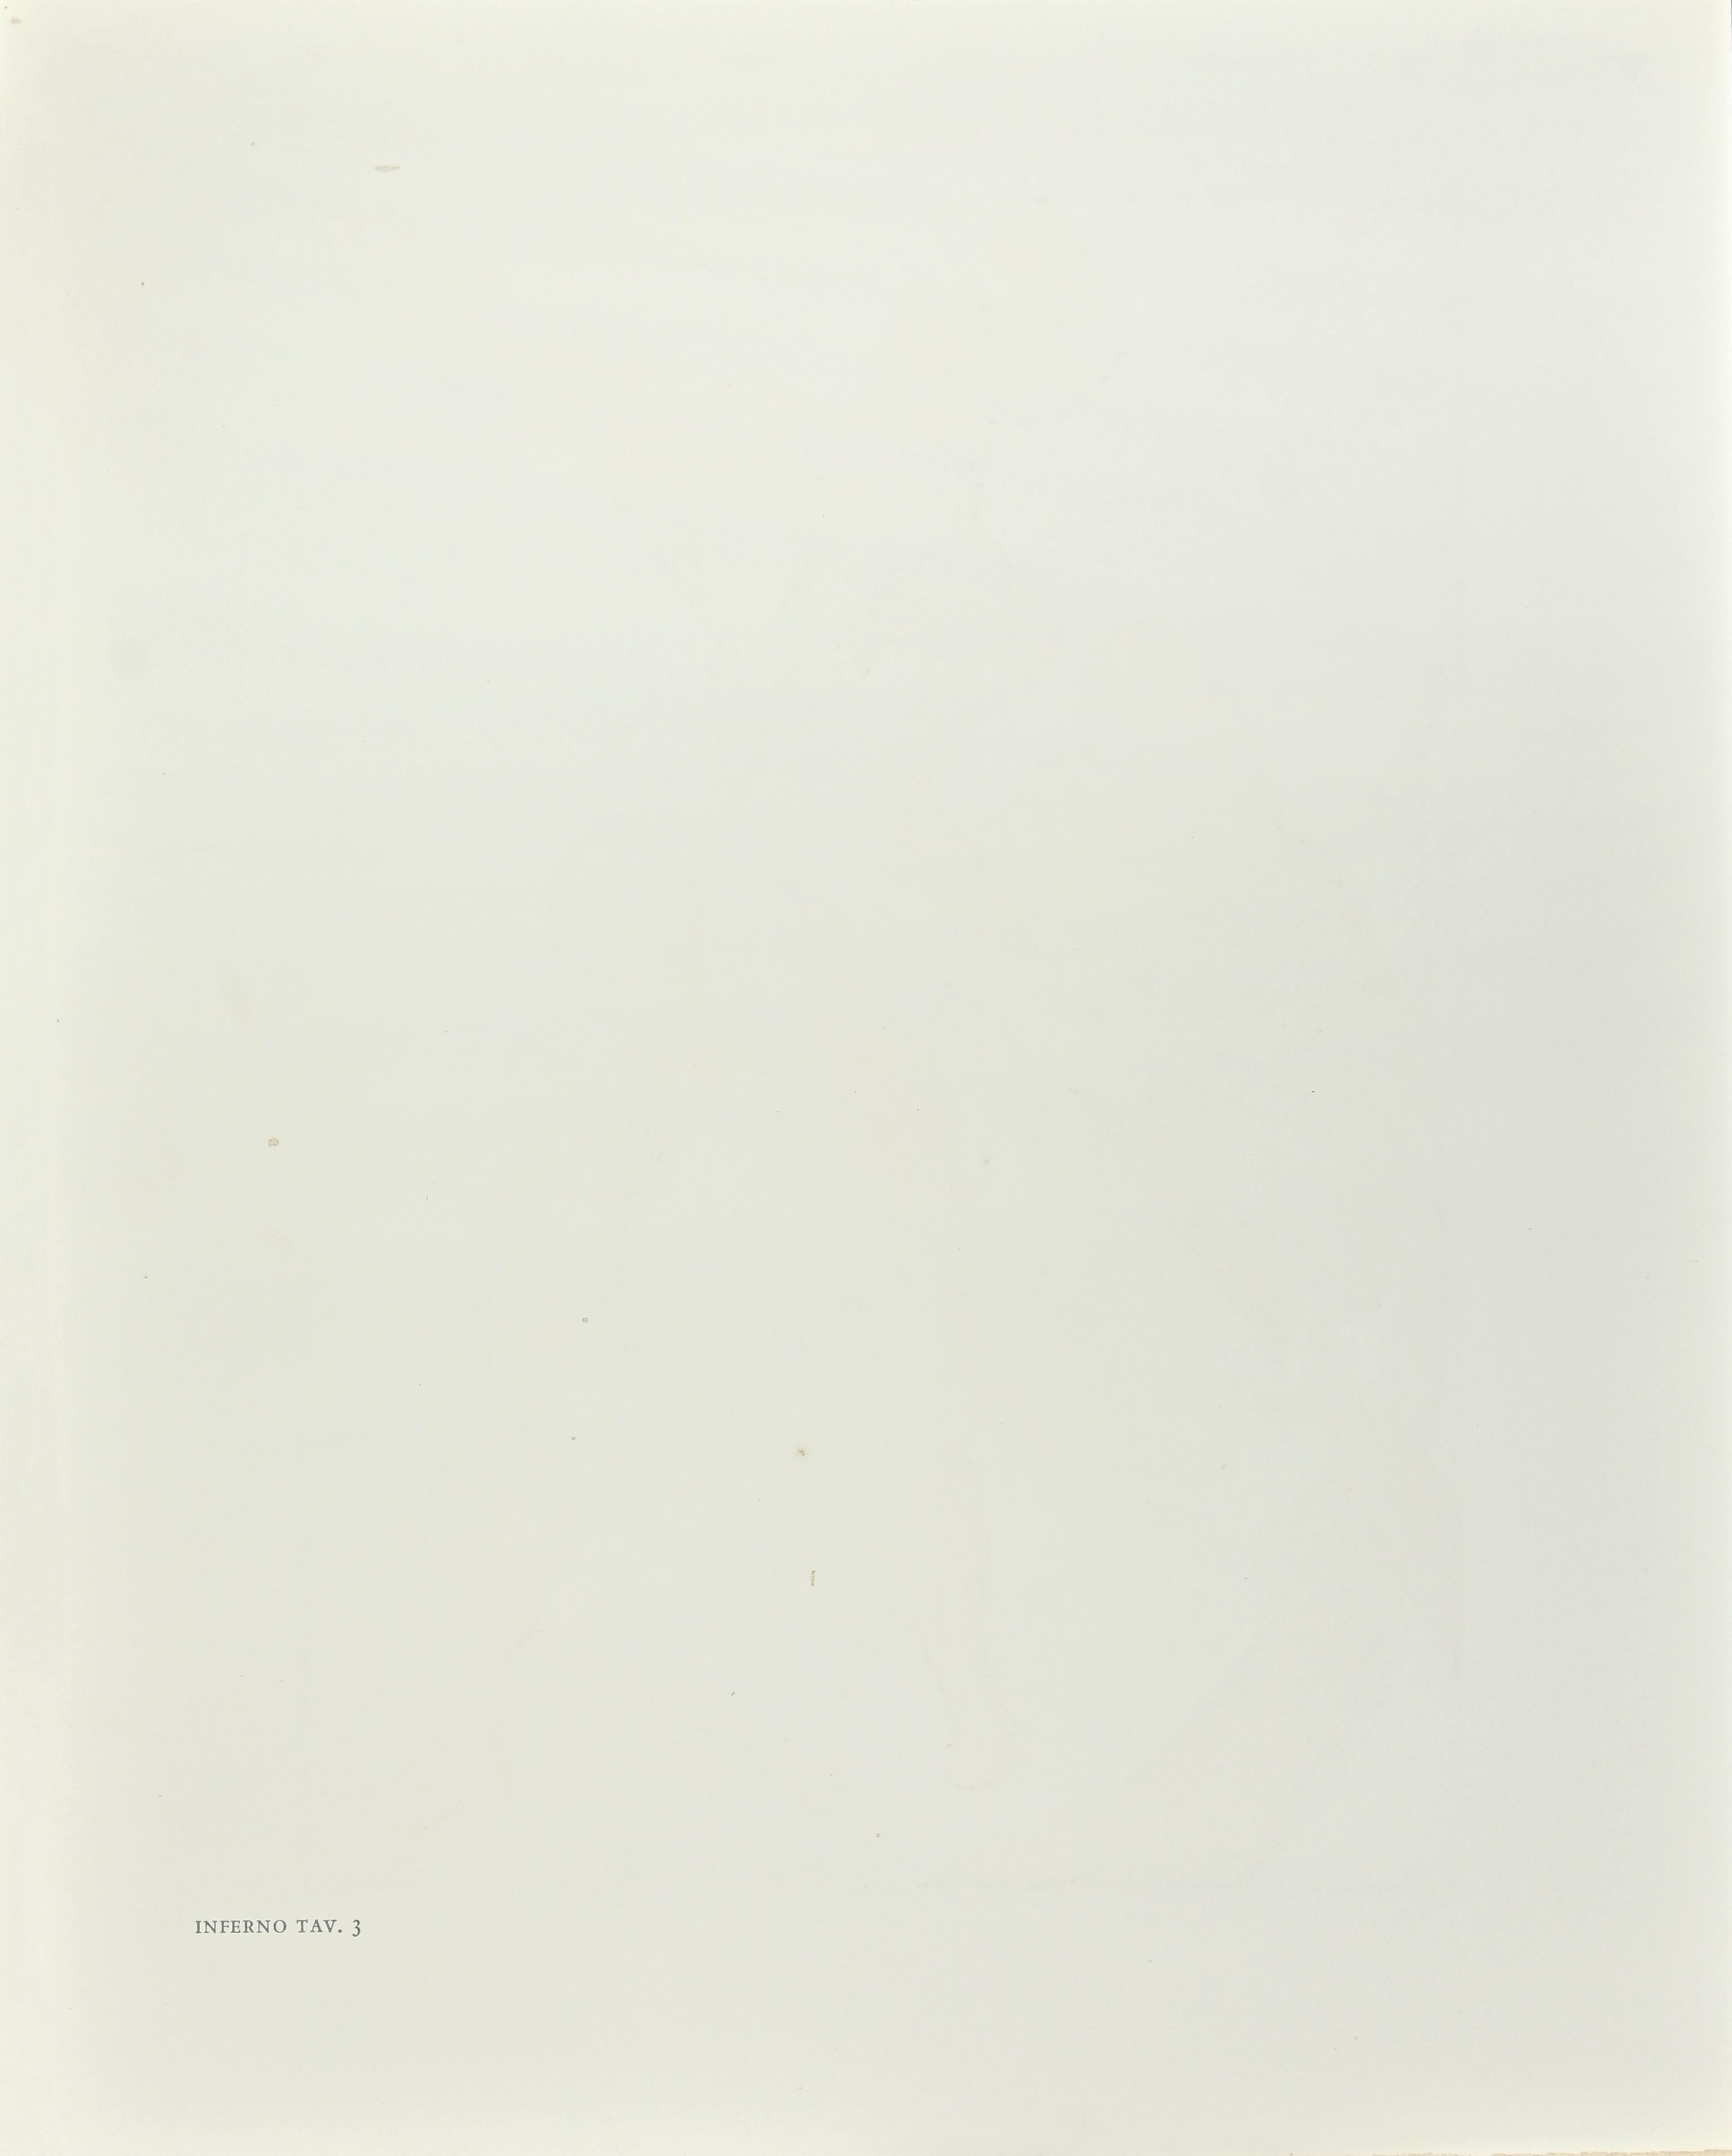 Charon - Original Woodcut Print attr. to Salvador Dalì - 1963 - White Figurative Print by Salvador Dalí